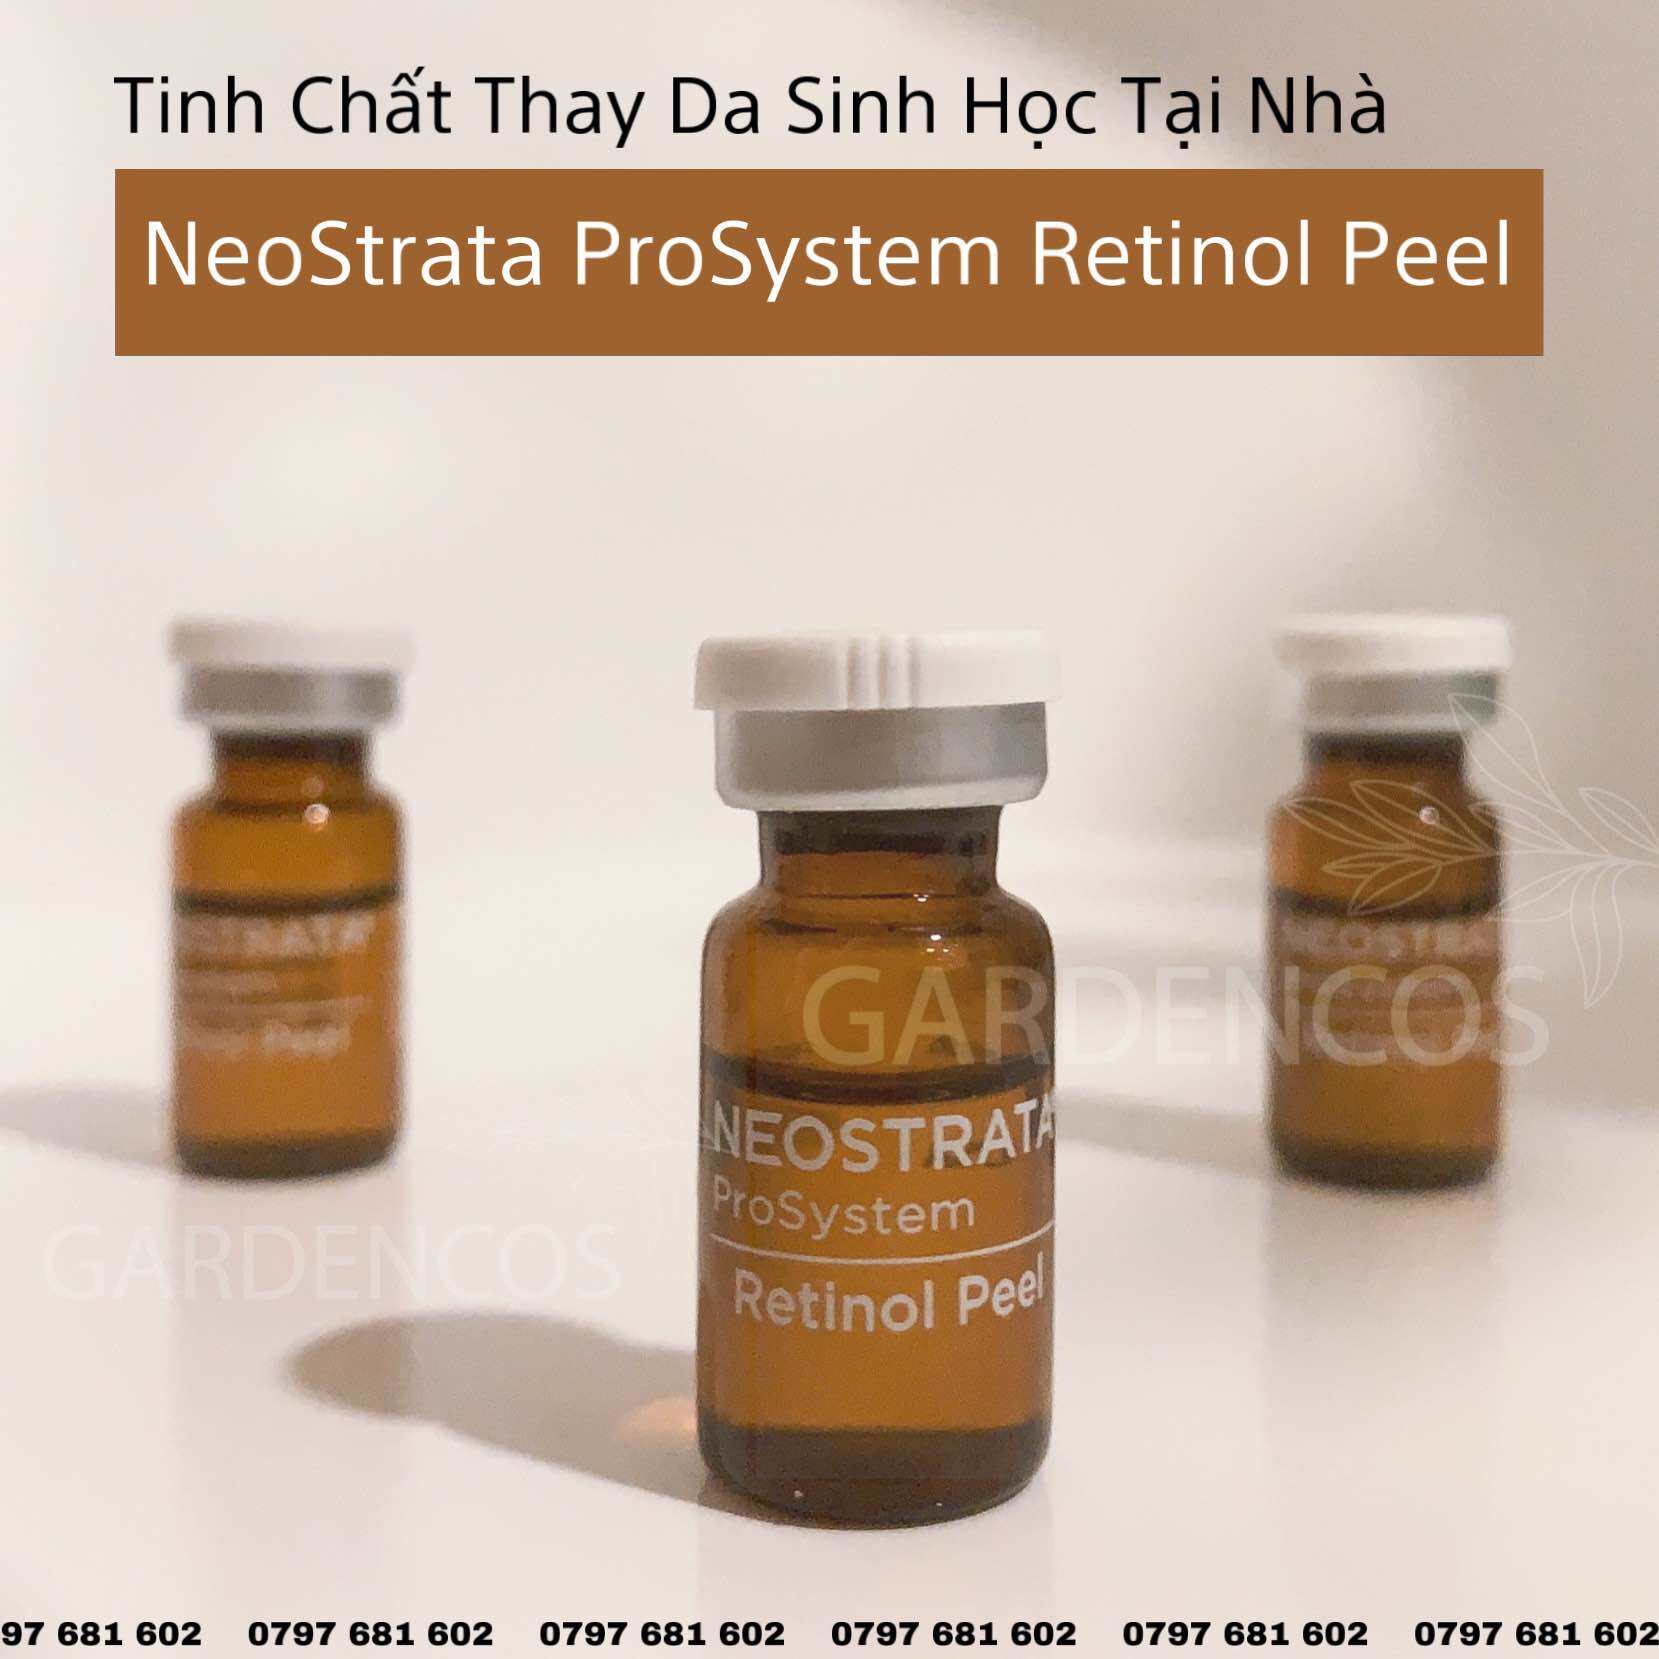 [Lẻ Ống] Tinh Chất Thay Da Sinh Học NeoStrata ProSystem Retinol Peel 1.5ml - Gardencos